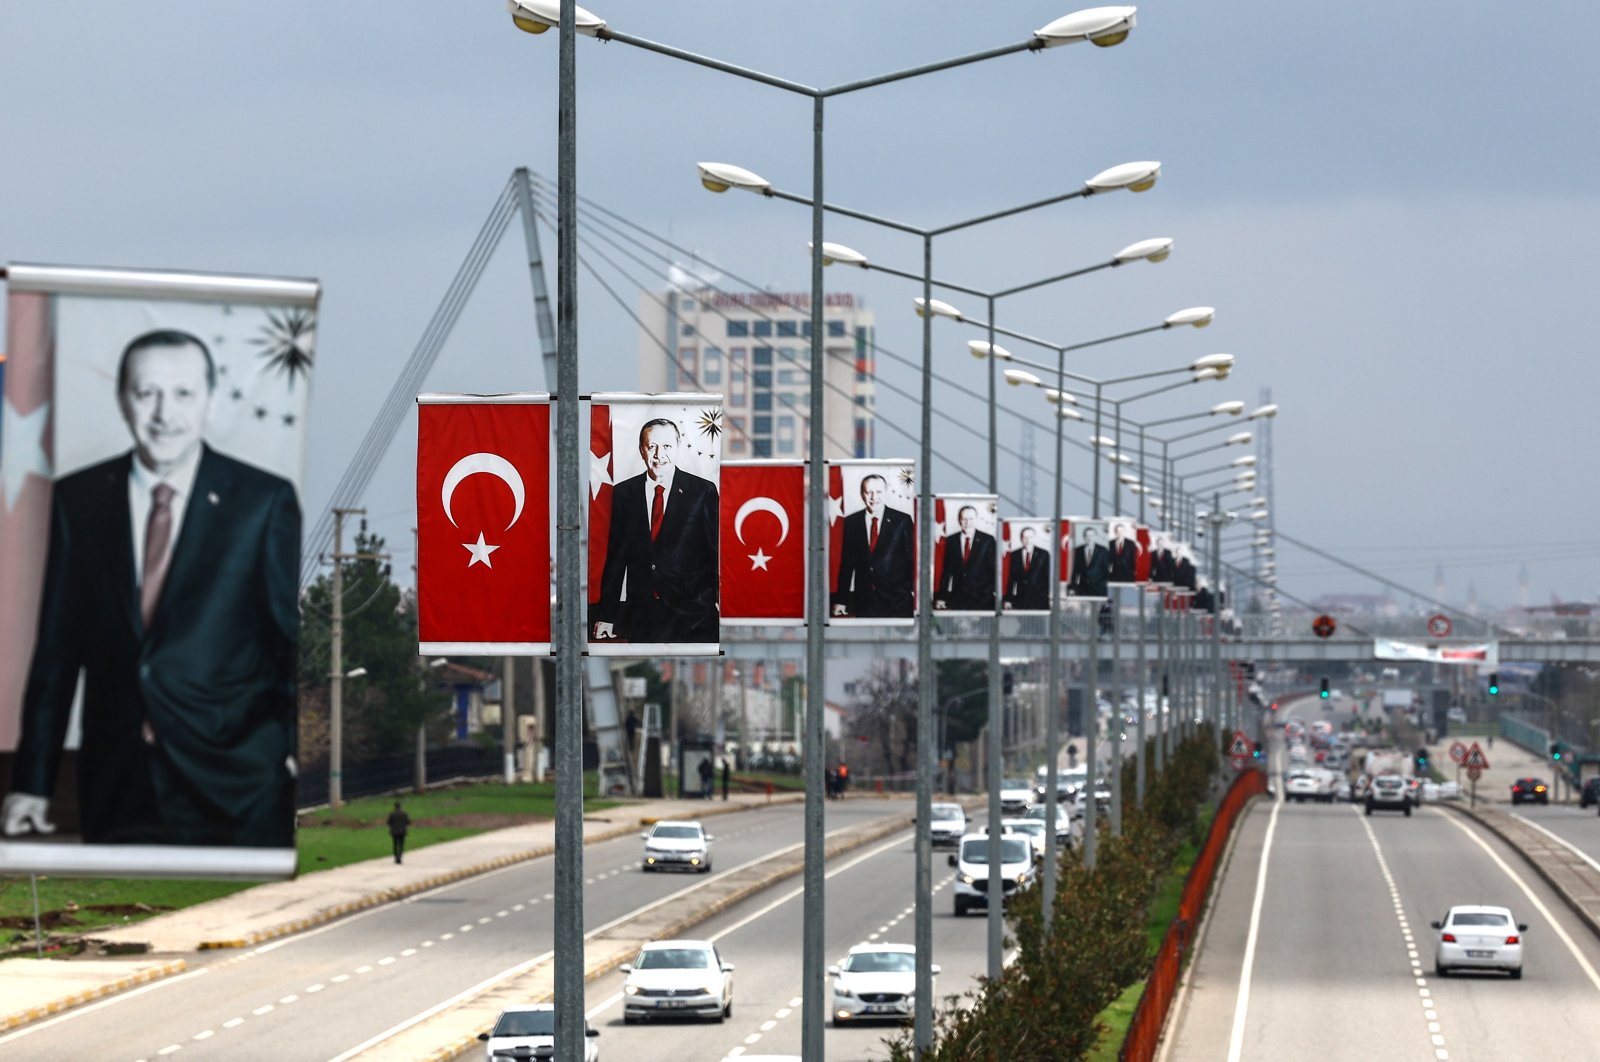 Ketertarikan internasional pada persaingan politik tumbuh menjelang pemungutan suara Turki